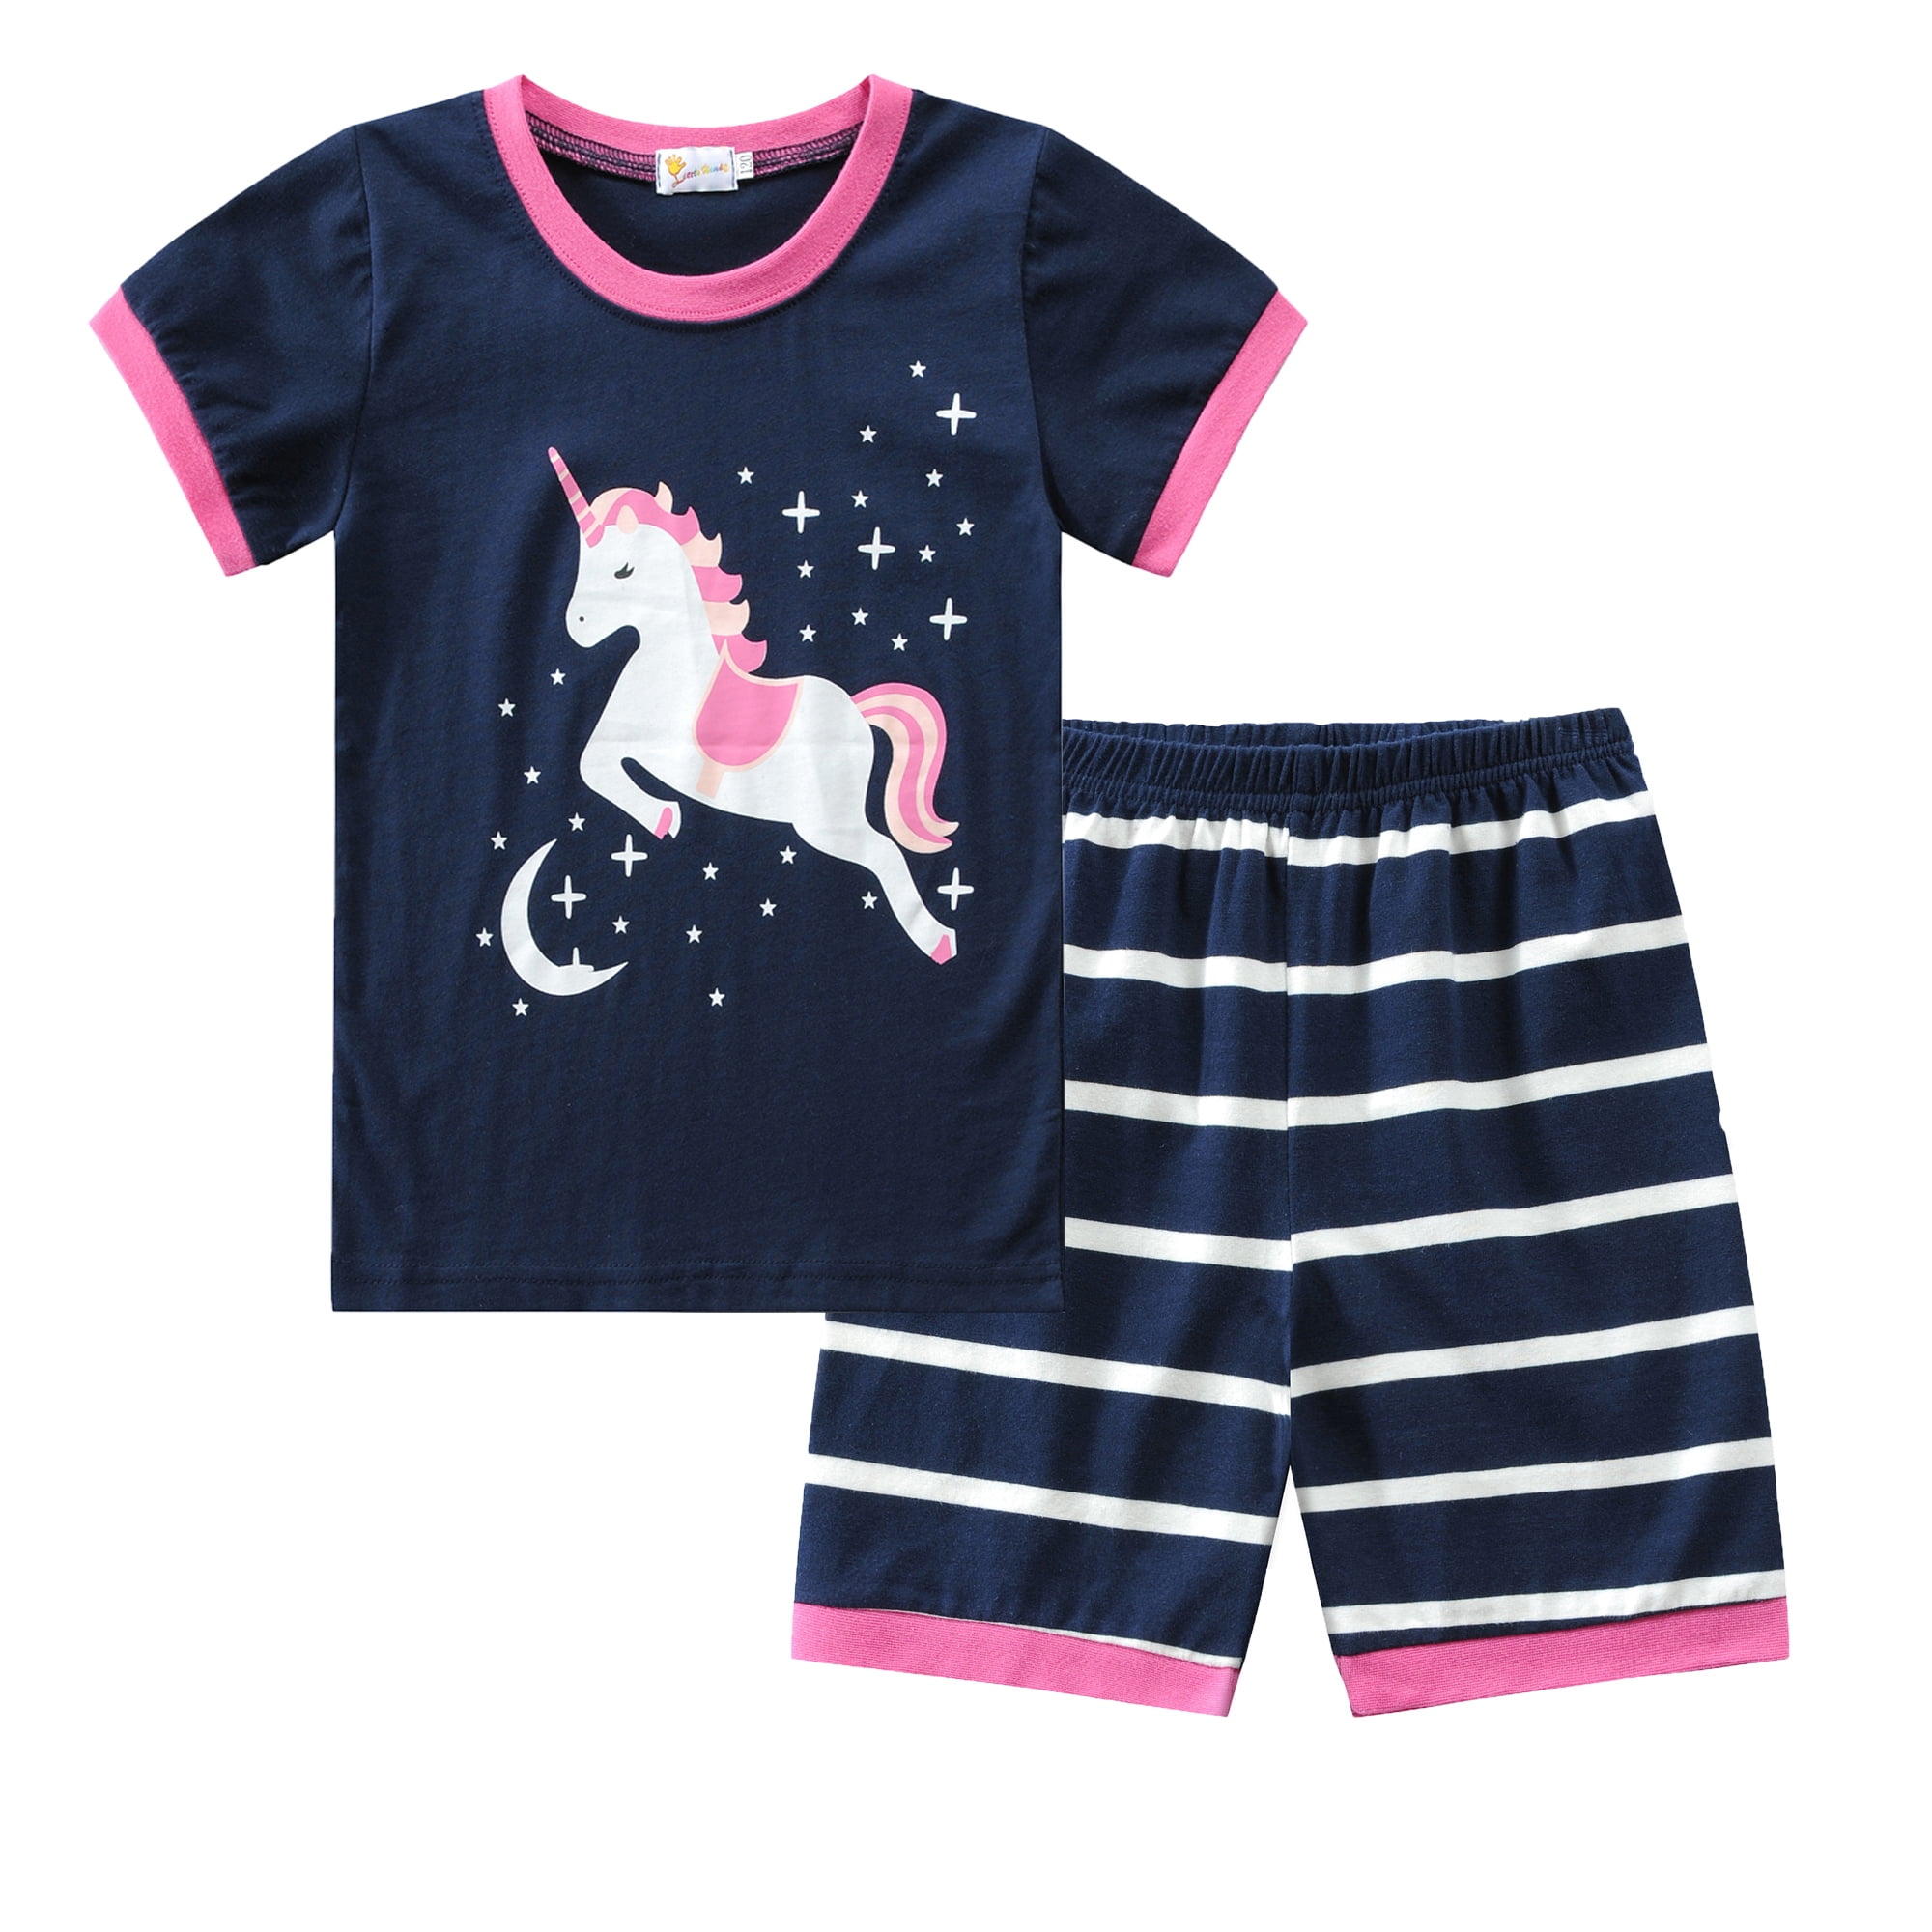 Little Hand Girls Pyjamas Sets Flamingo Print Girls Pjs Short Sleeve Cotton Sleepwear Tops Shirts & Pants for Age 1-7 Years